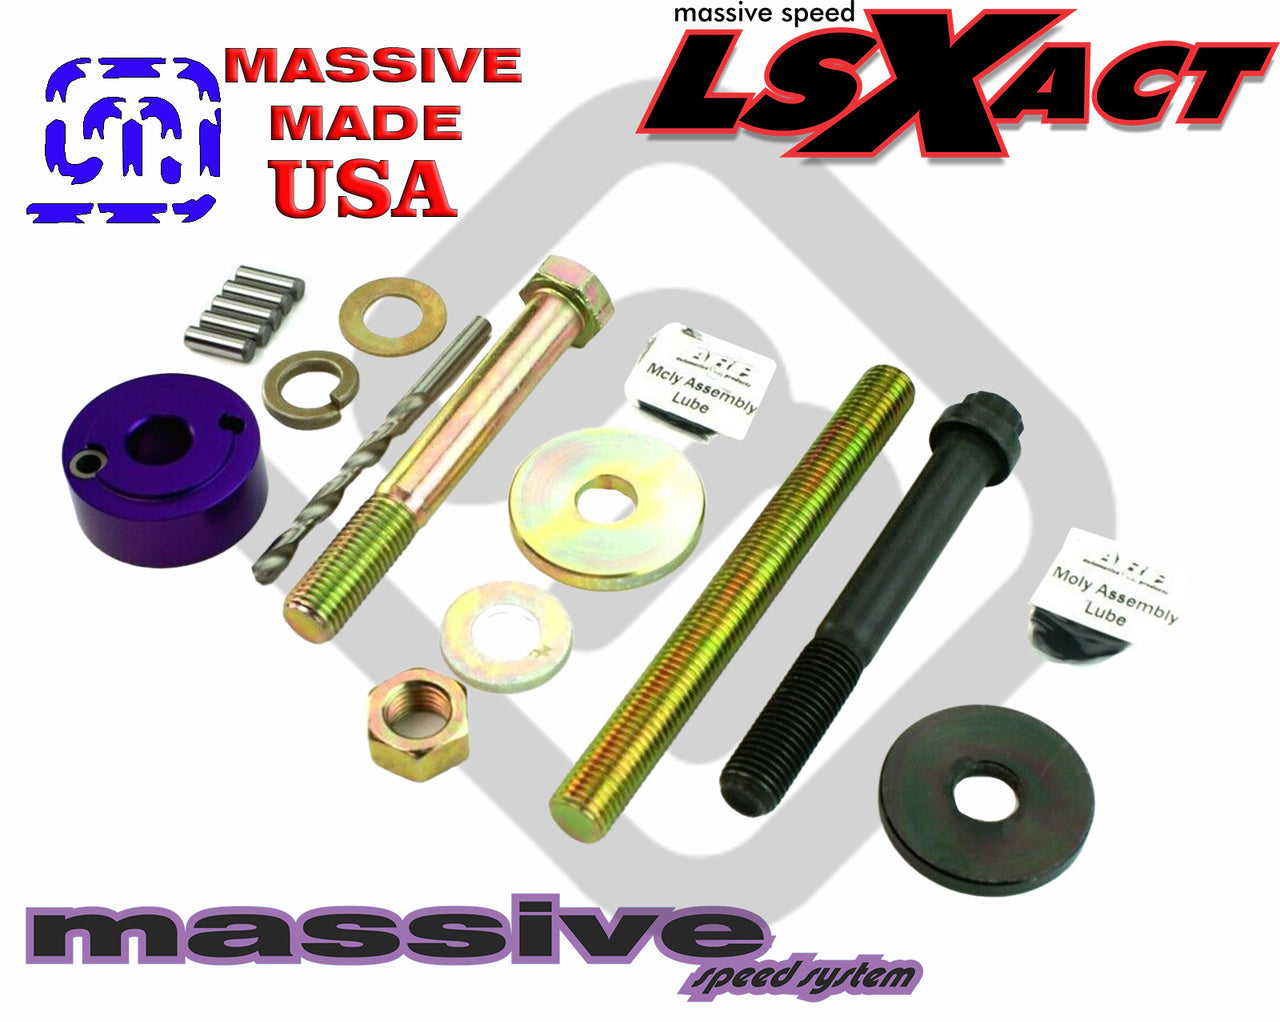 Massive Speed Crank Pinning Install Harmonic Damper Balancer Pulley Bolt LS1 ARP KIT Tool LSX MATO'16714